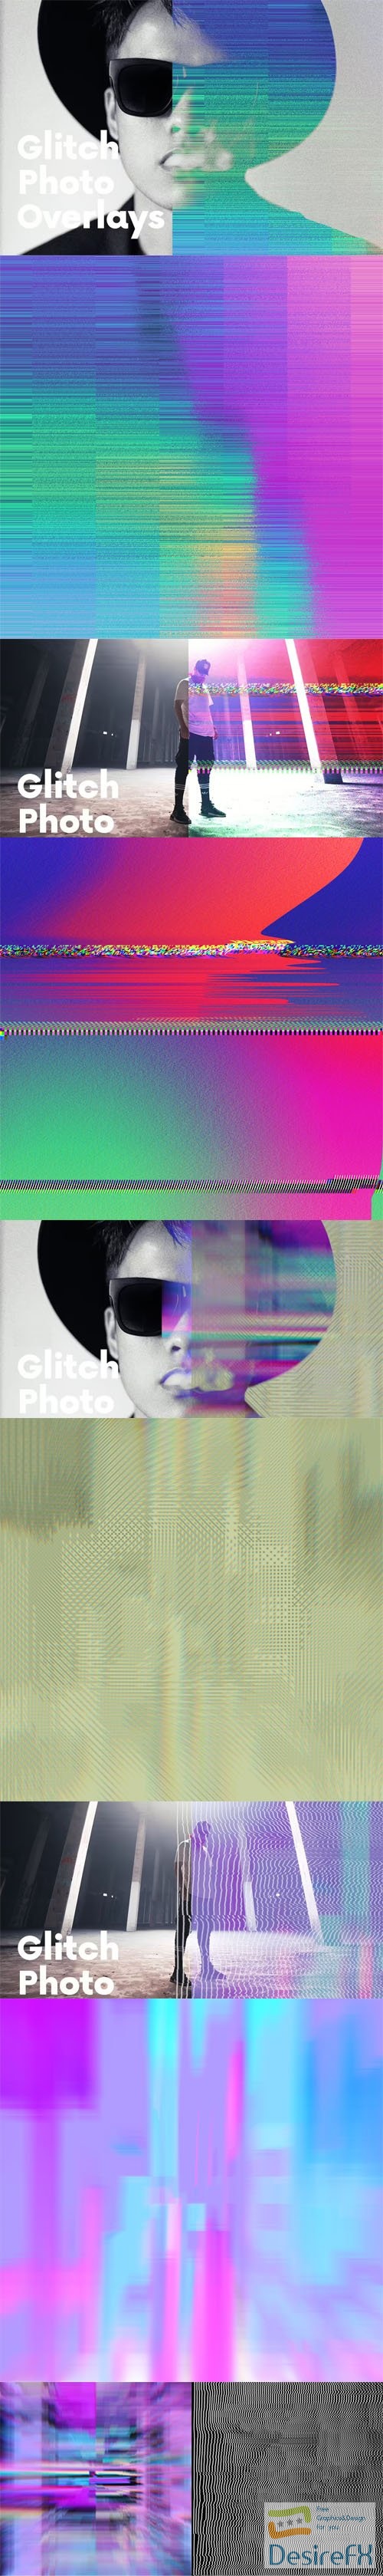 Glitch Photo Overlays for Photoshop